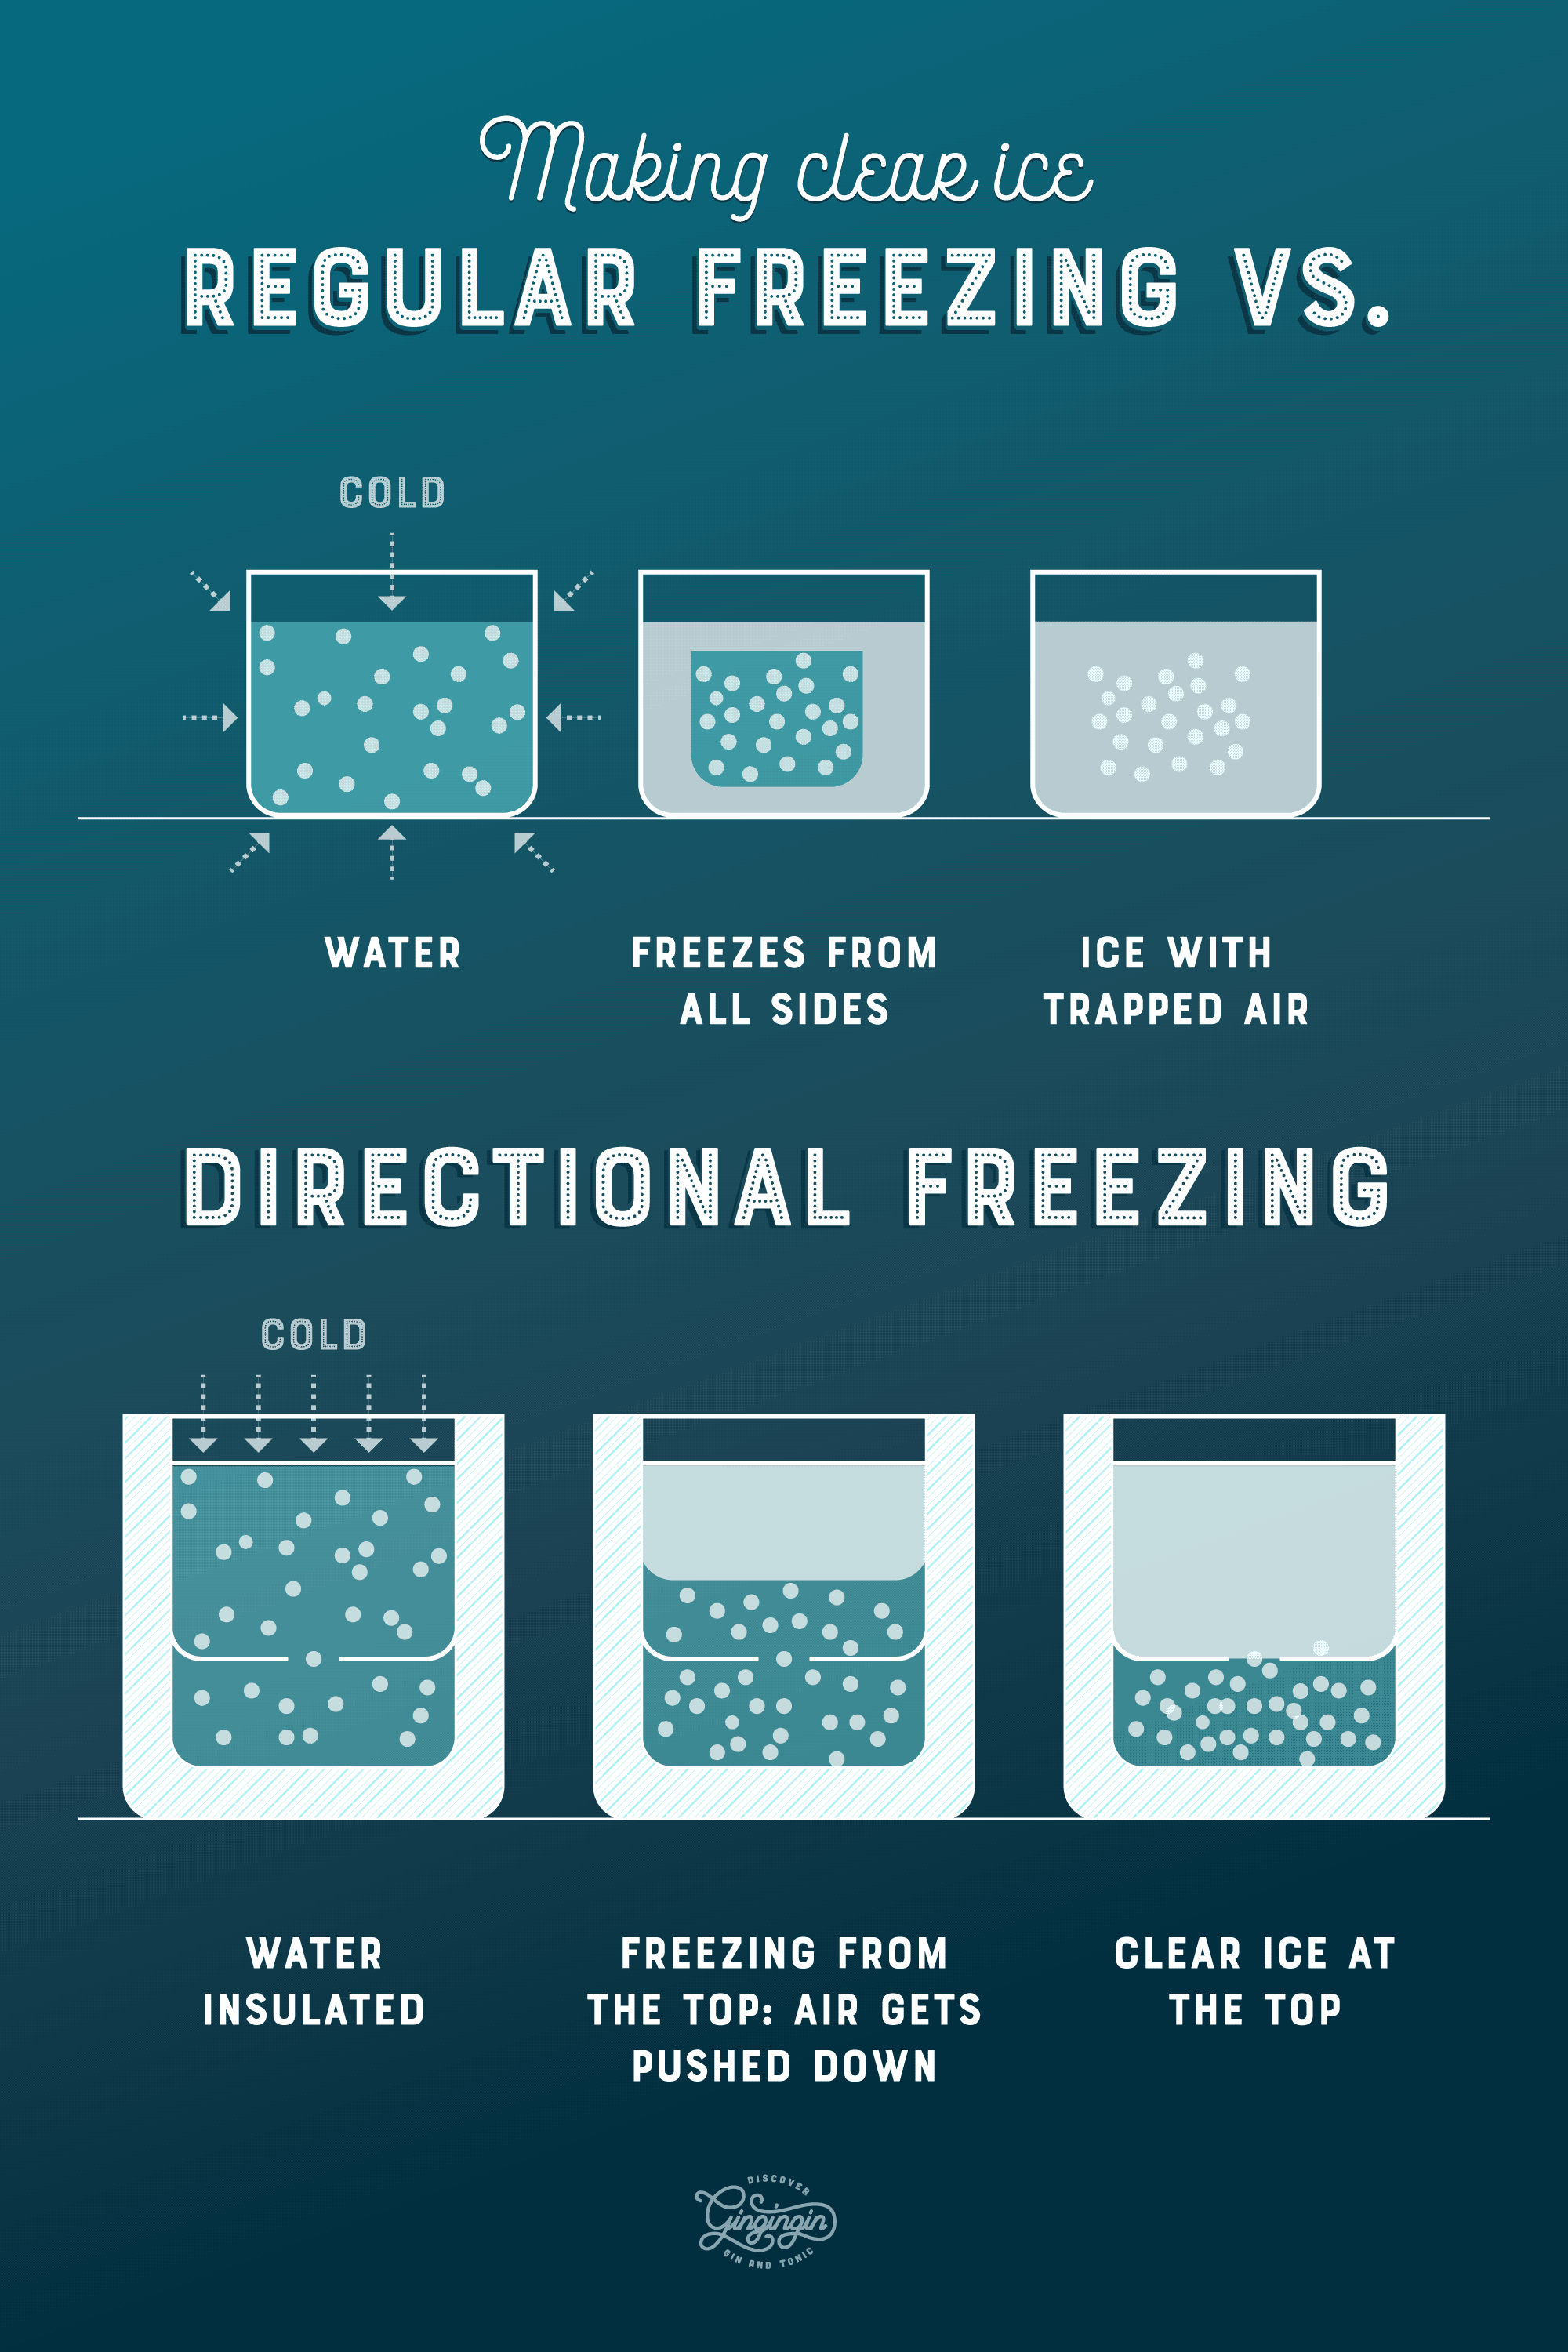 http://liquorlabs.tv/assets/content/regular-freezing-vs-directional-freezing-illustration.png